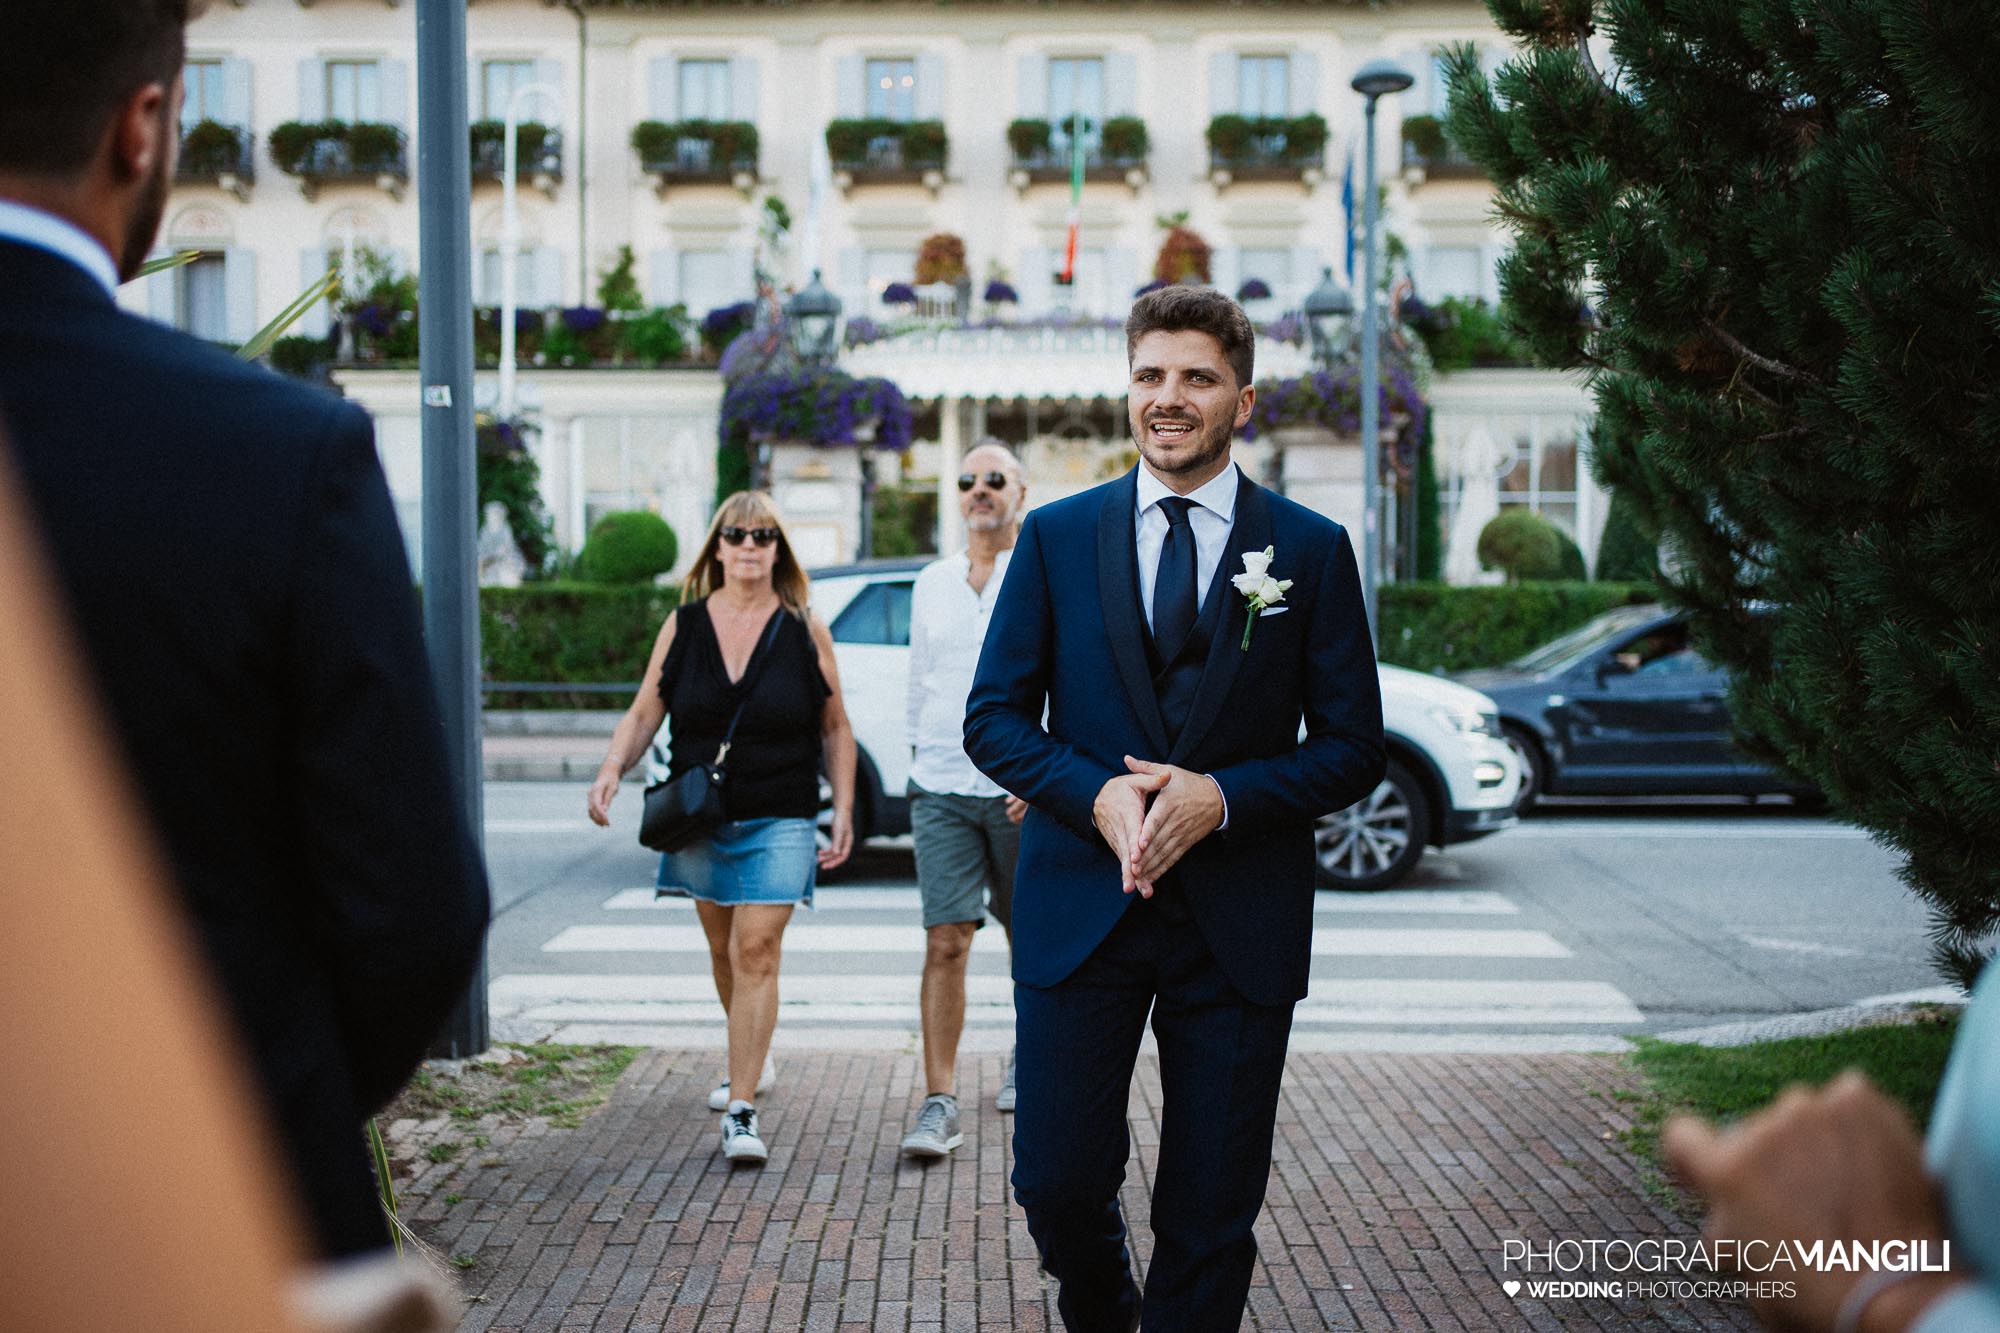 Amanda and Davide,Photos of Amanda and Davide&#039;s wedding